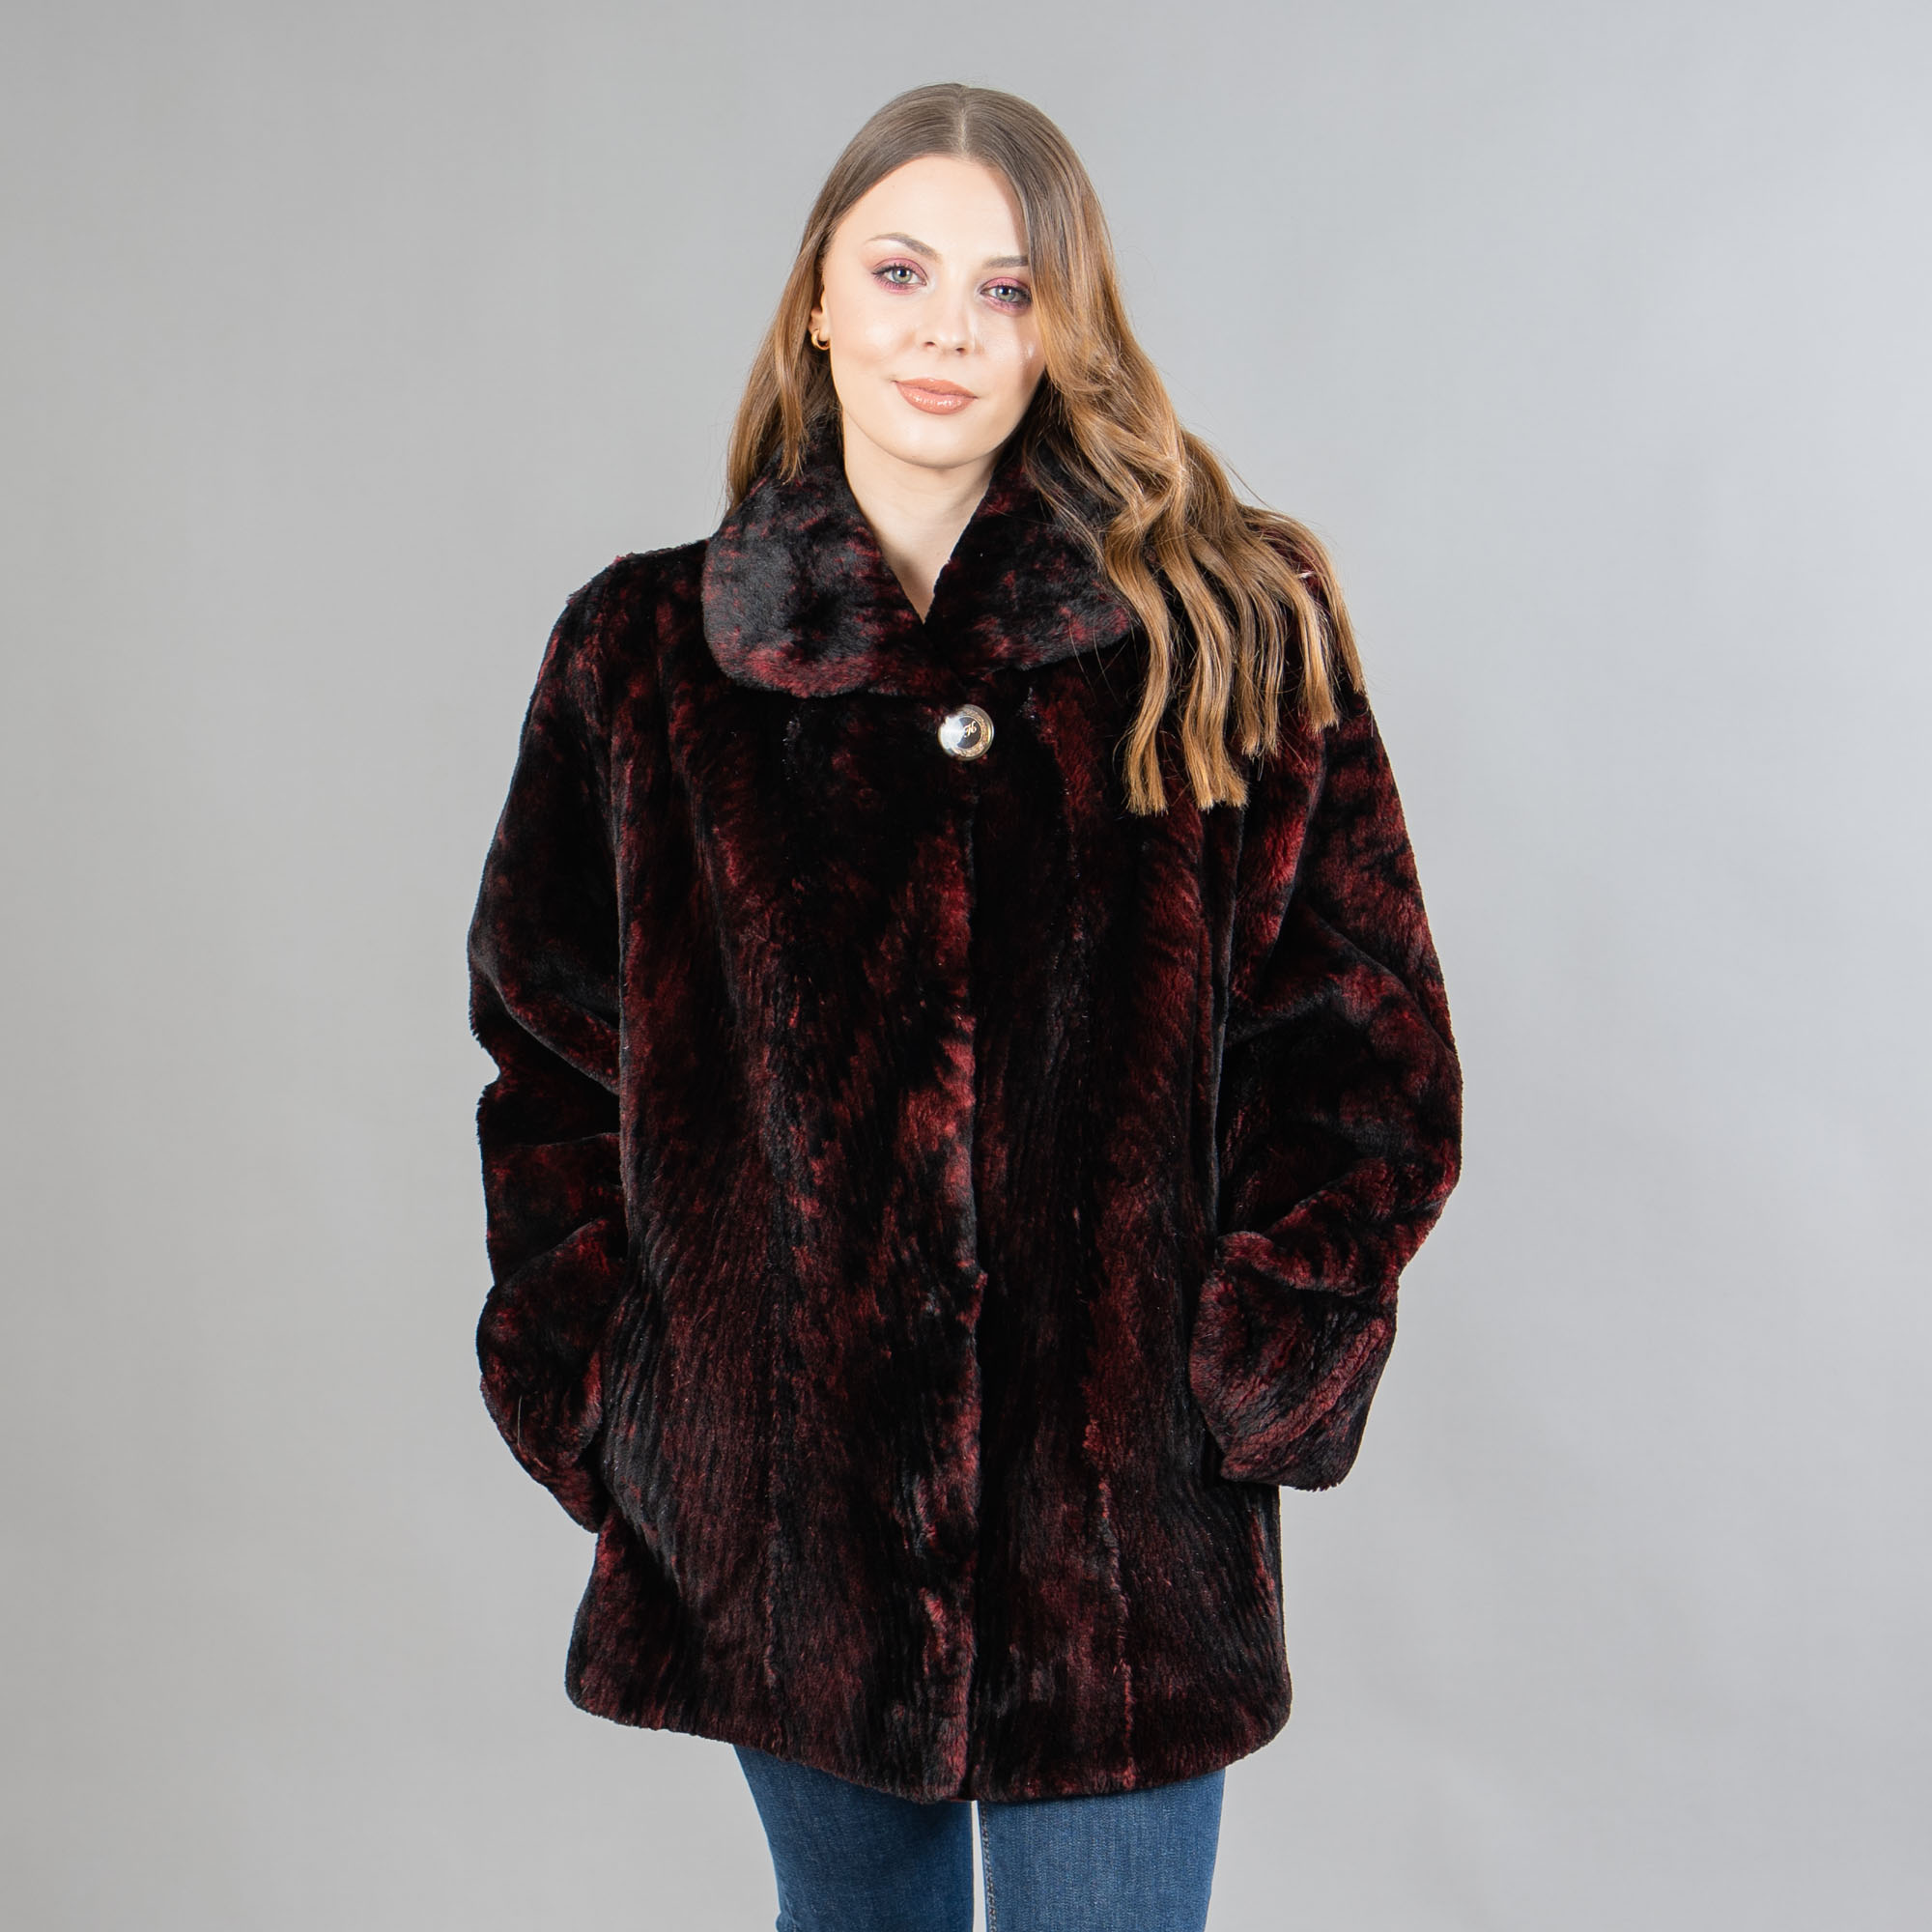 burgundy beaver fur jacket with a collar